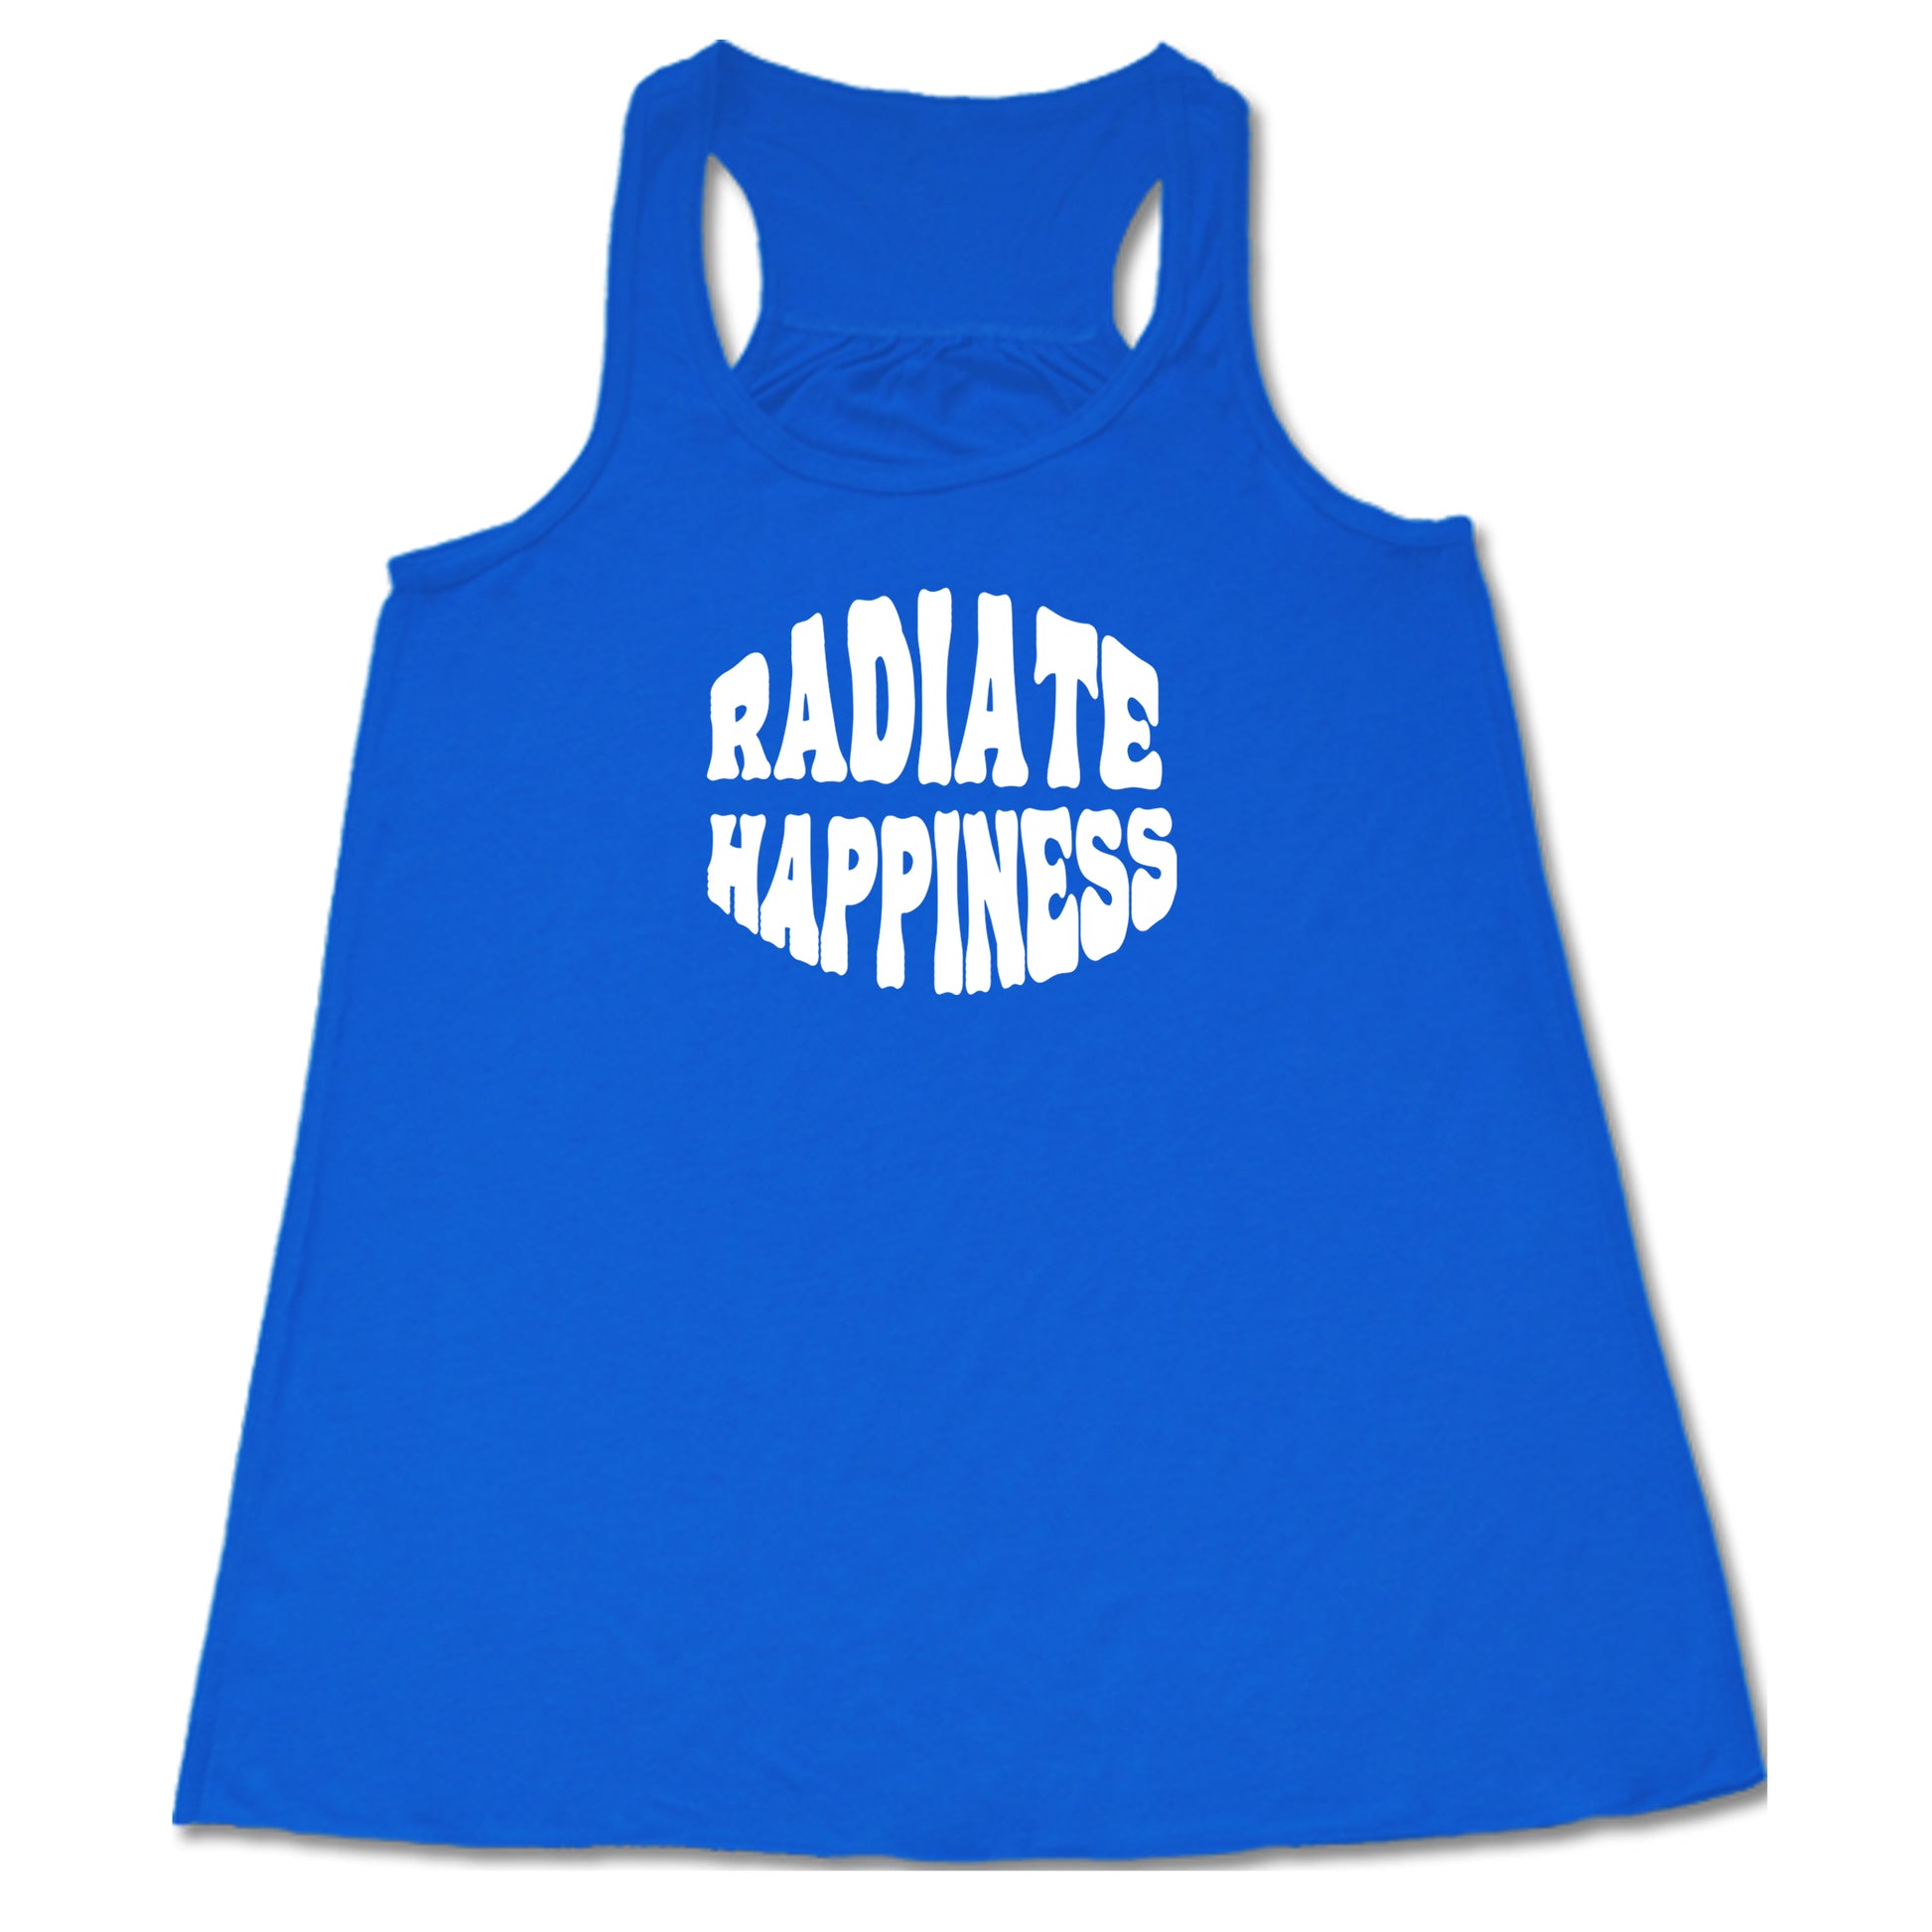 radiate happiness blue racerback shirt